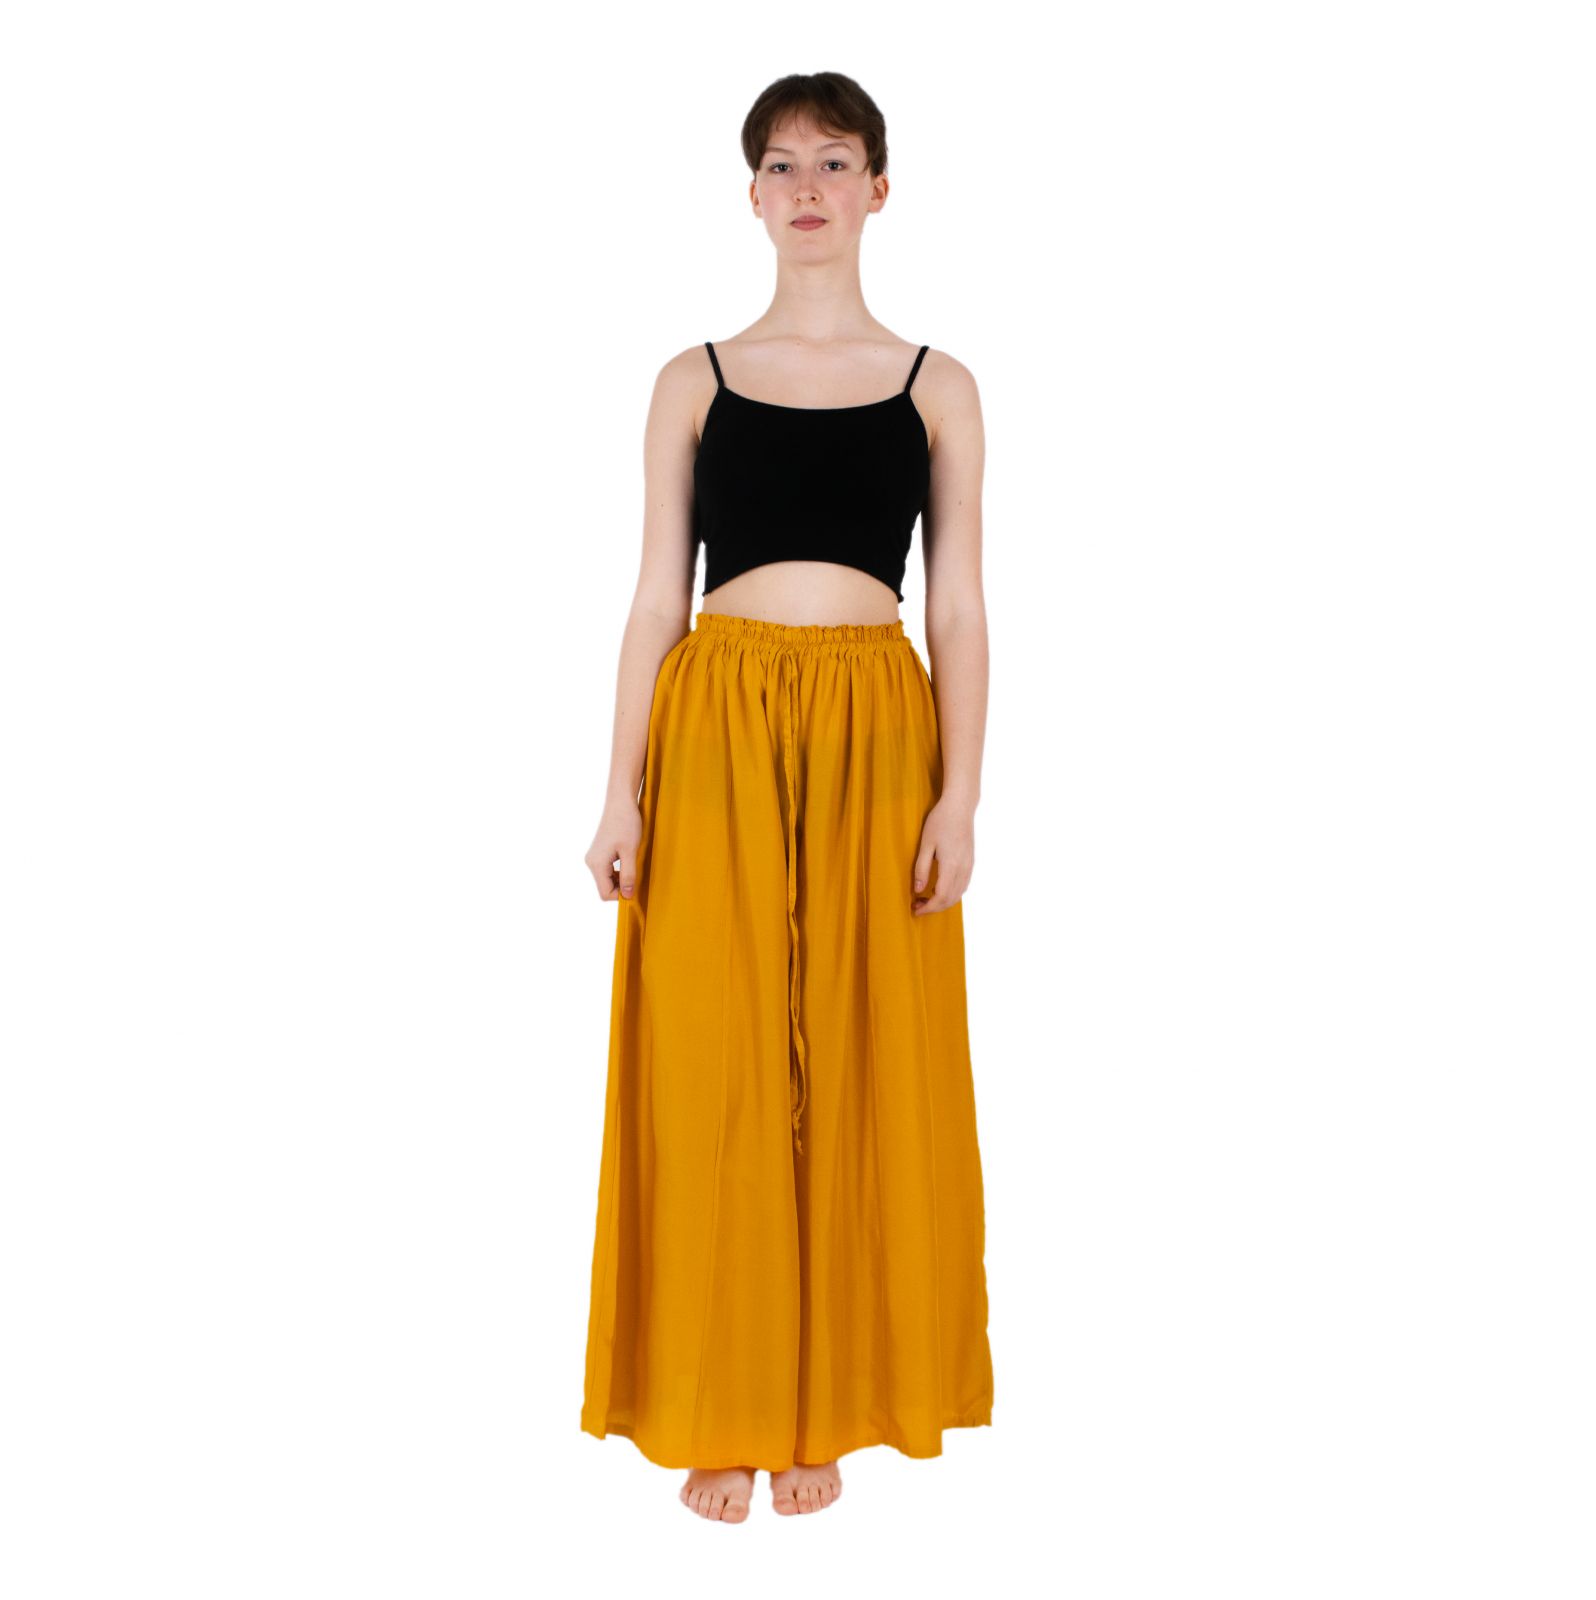 Trouser skirt Isabella Mustard Yellow Thailand